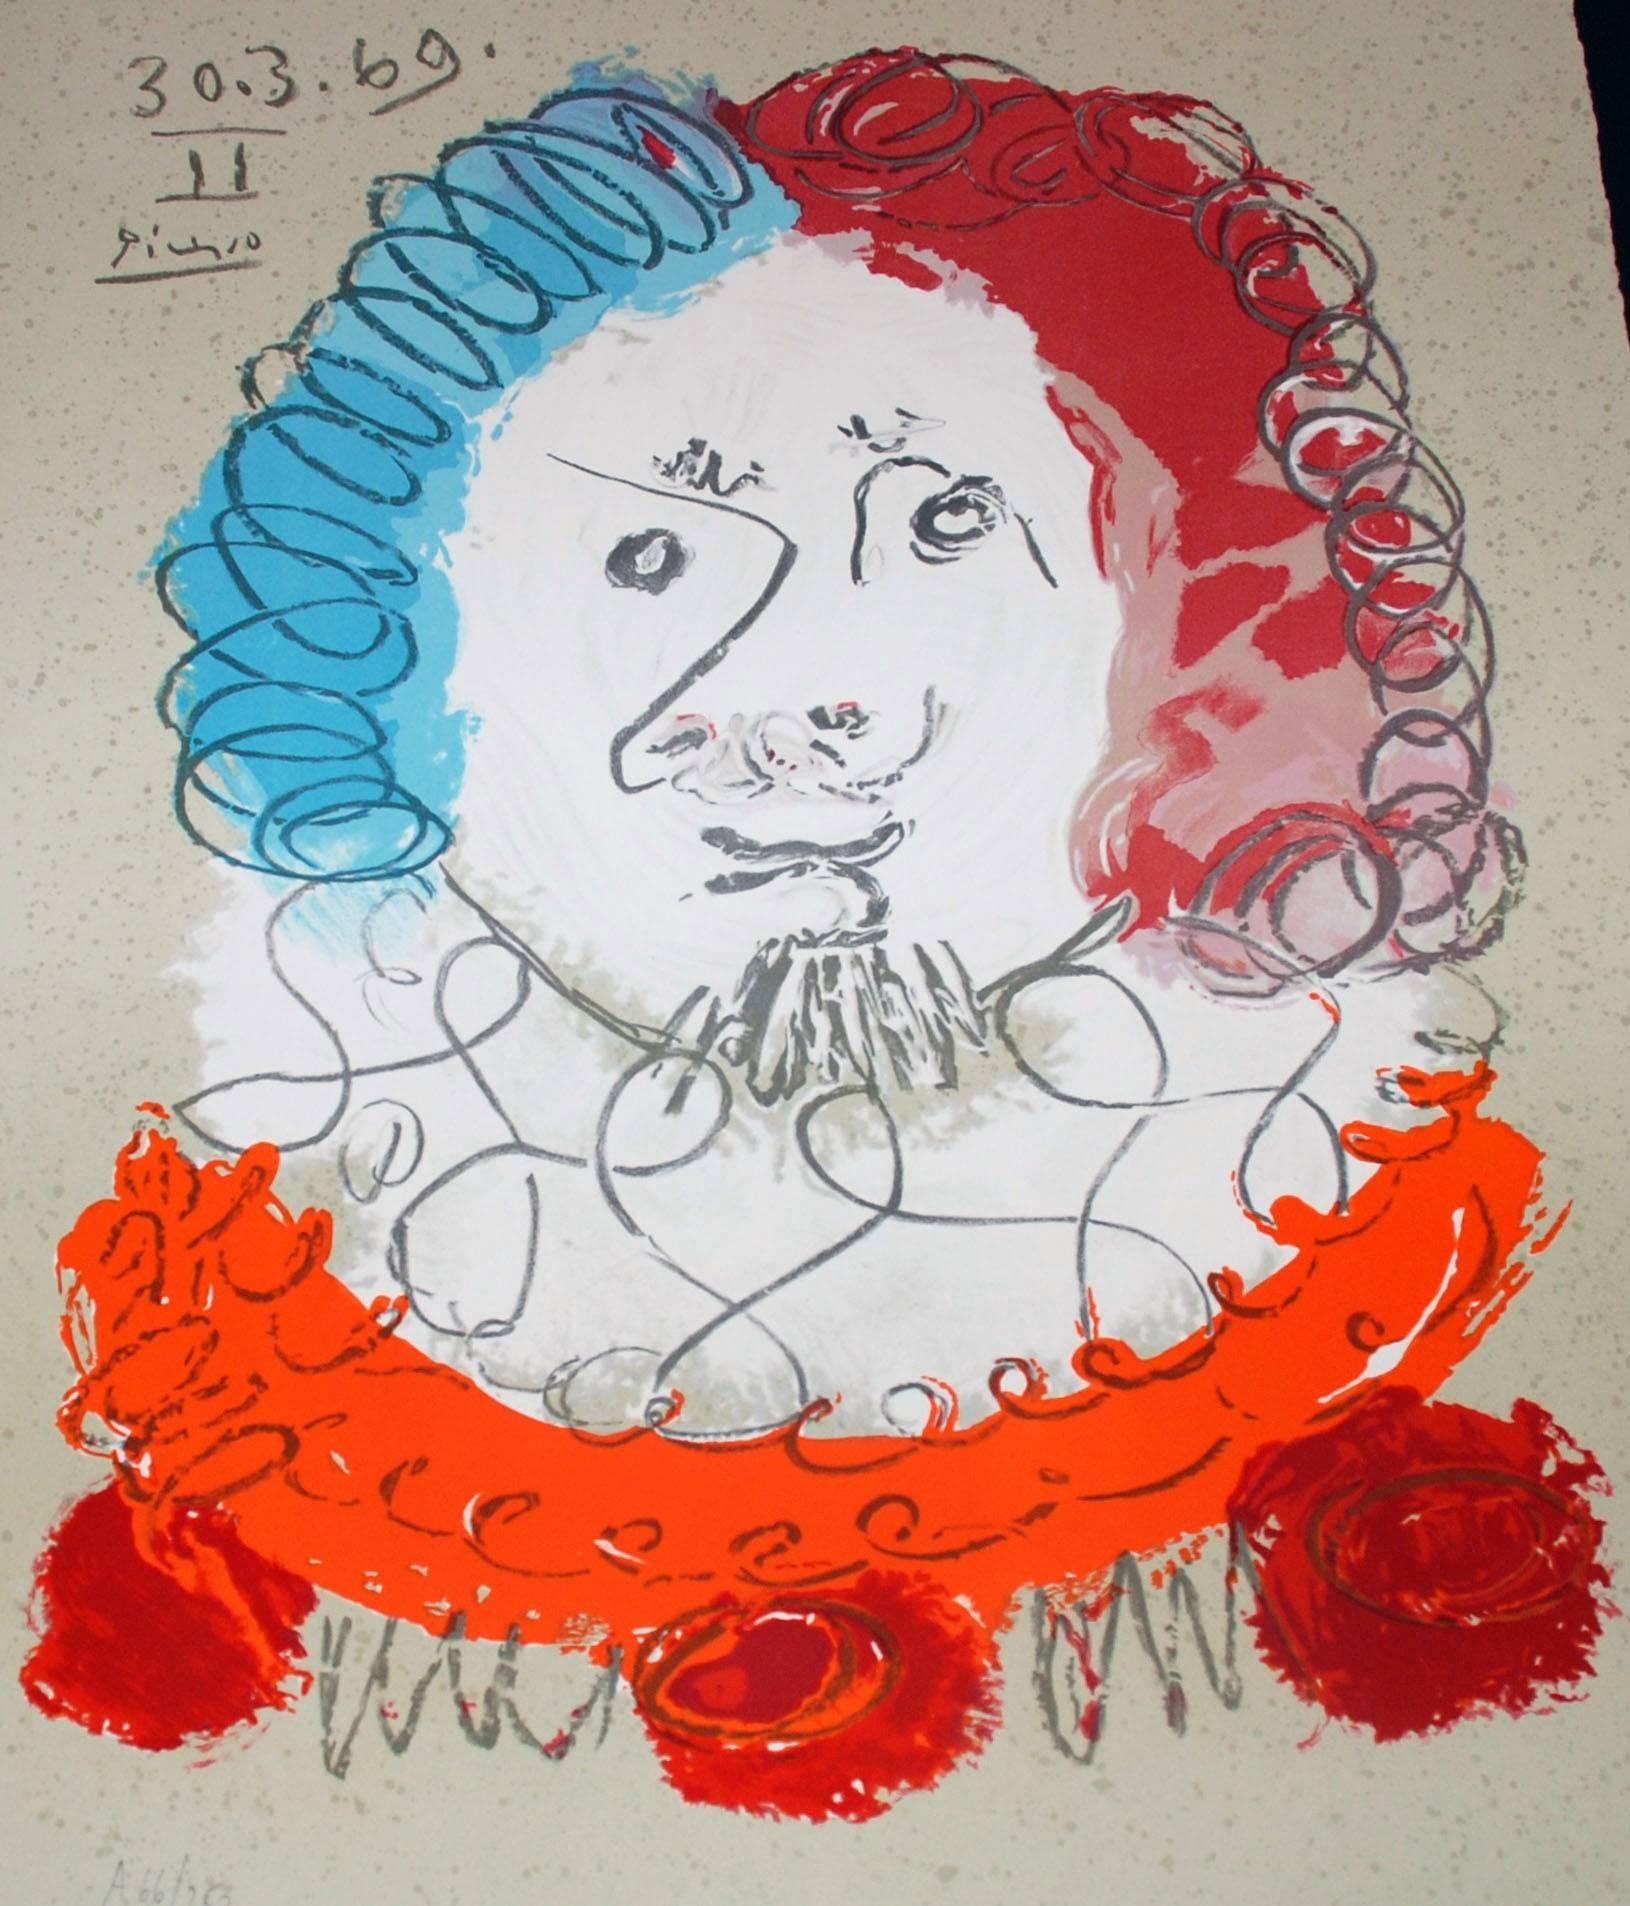 (after) Pablo Picasso Portrait Print - 30.3.69 II, from Portraits Imaginaires